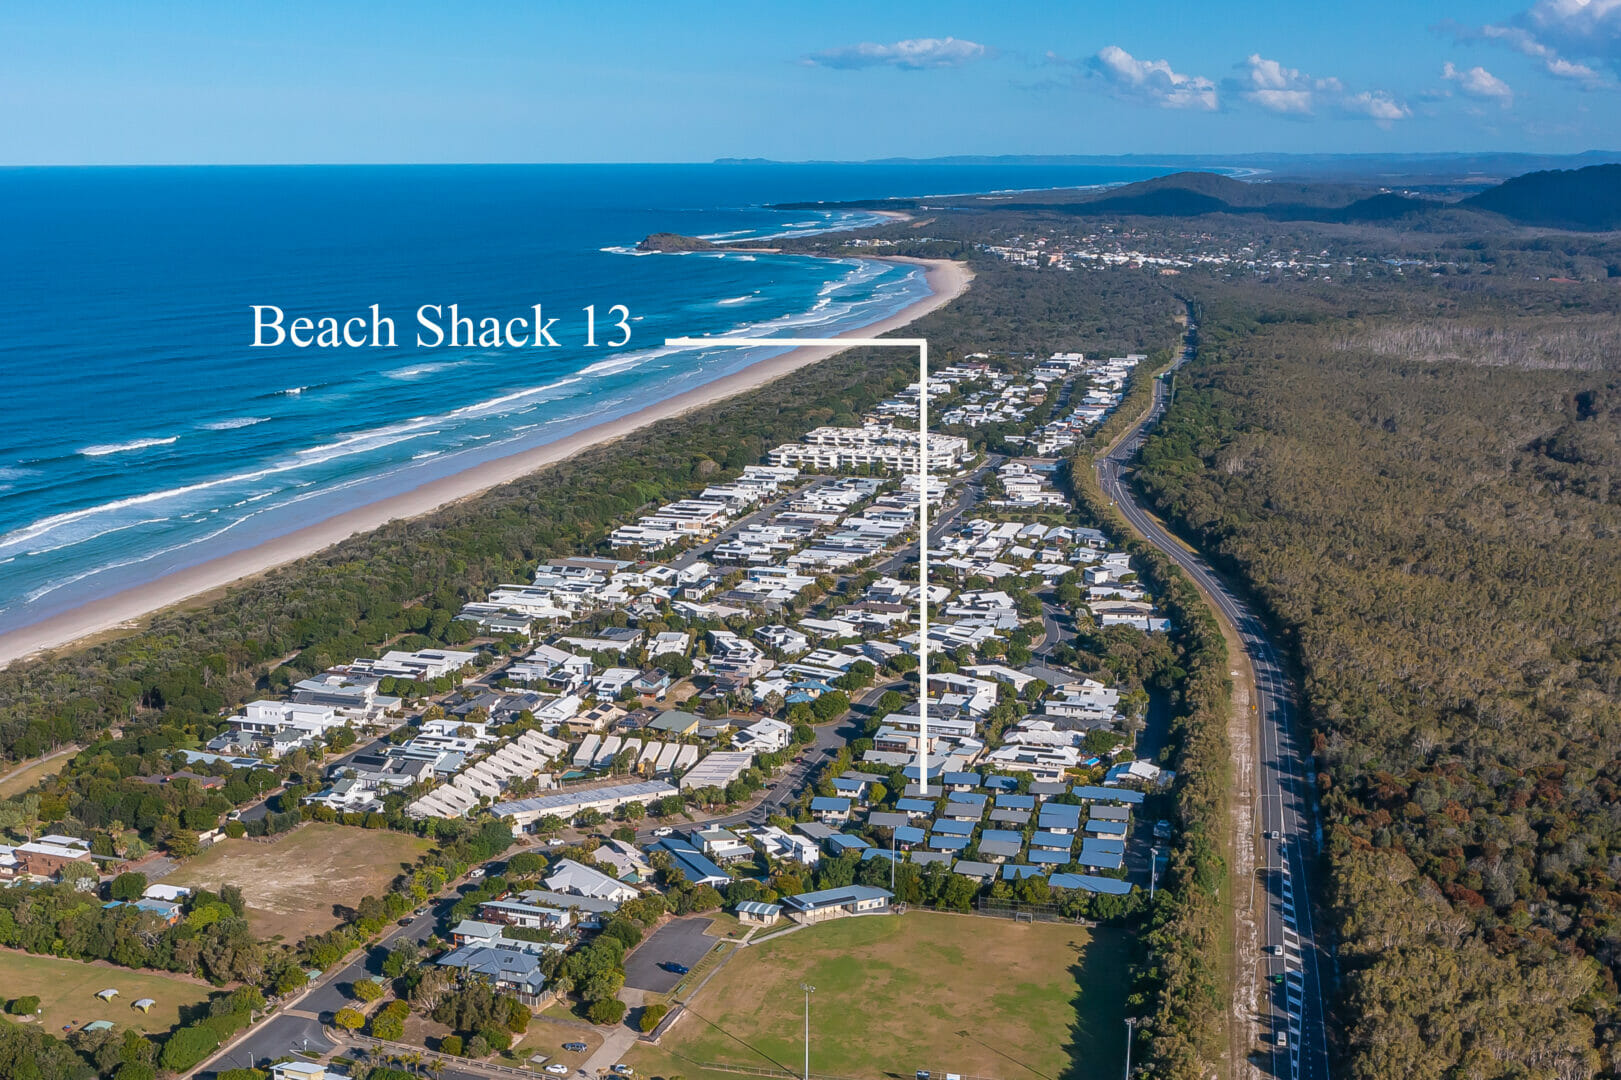 beach shack 13 drone (1 of 1)